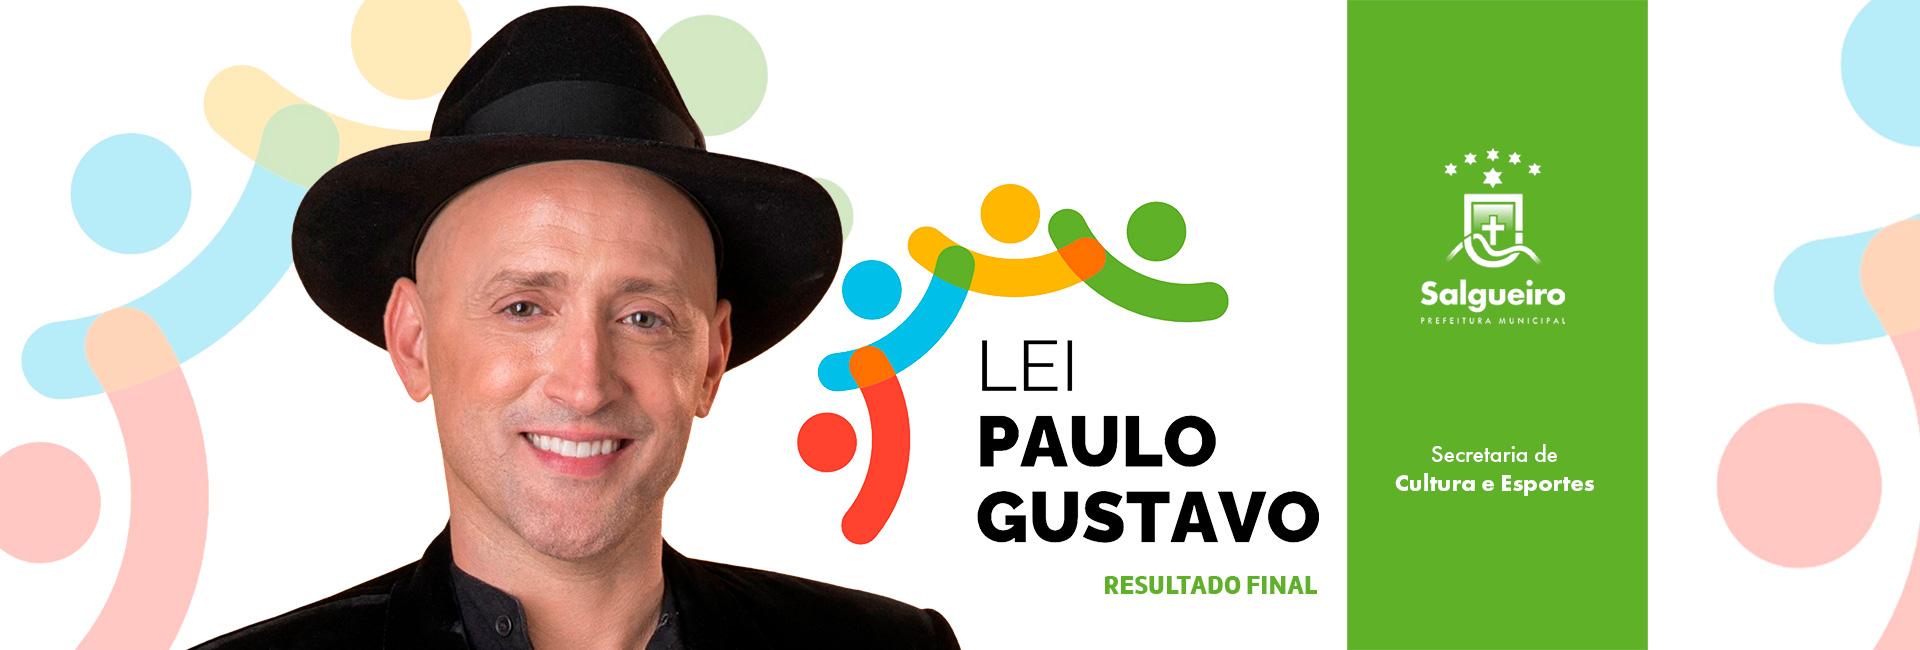 Lei Paulo Gustavo - Resultado FINAL.